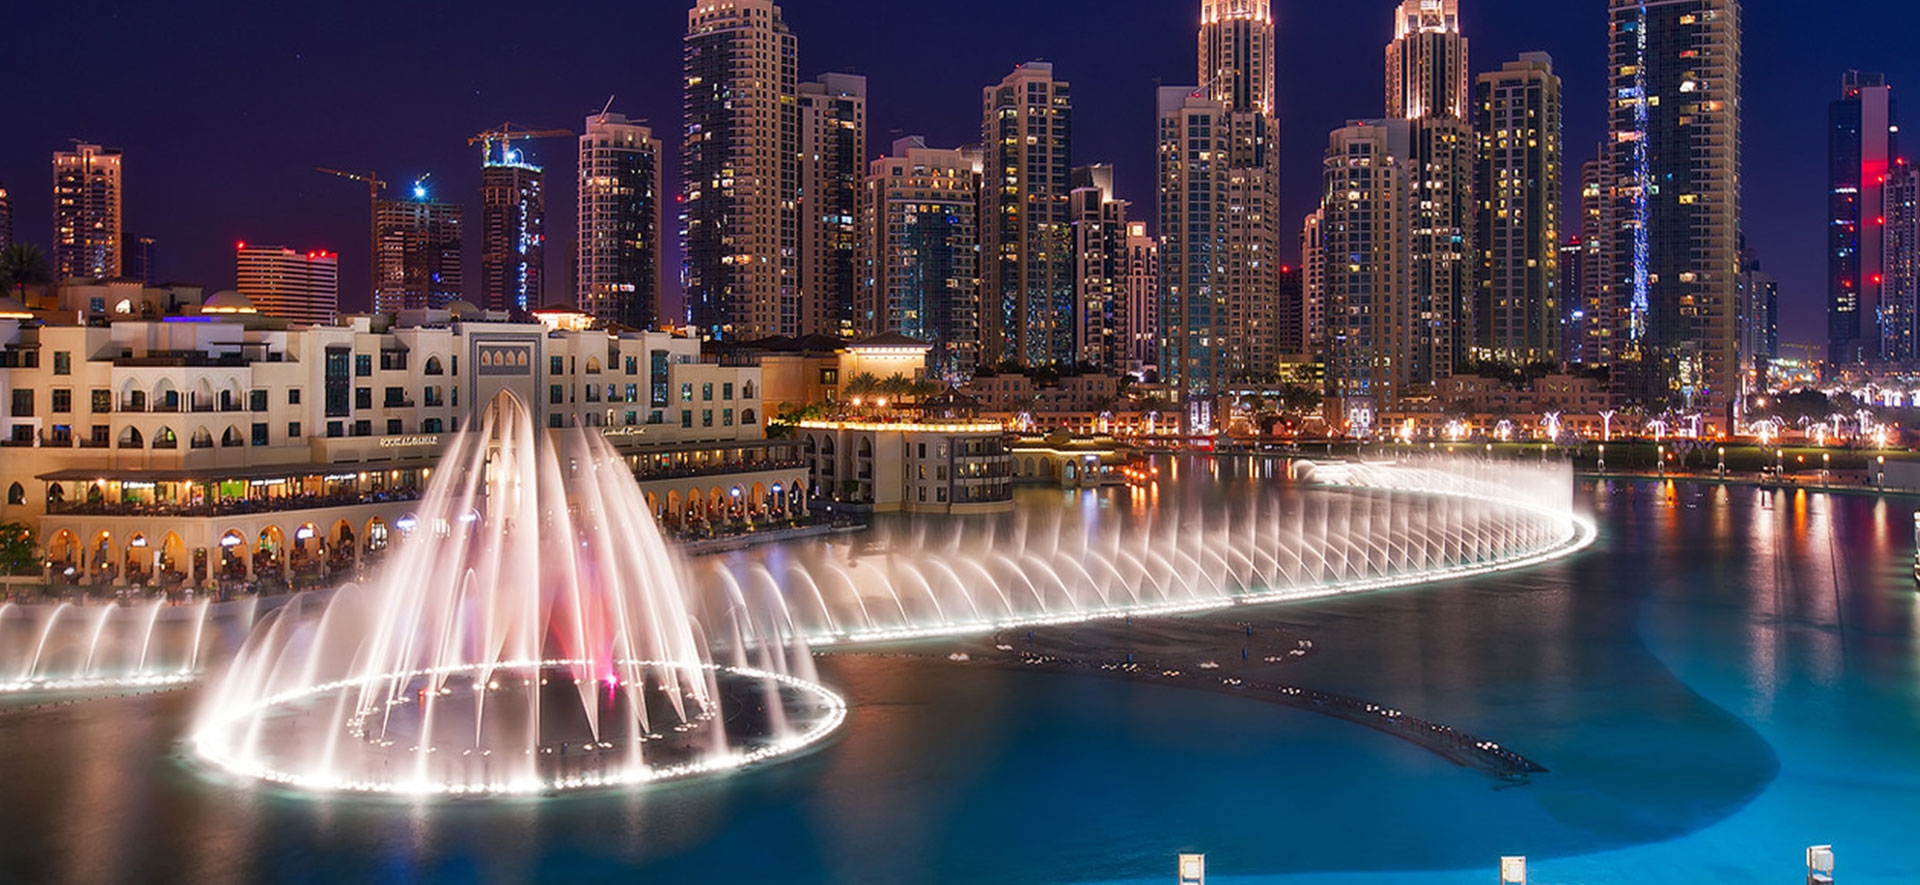 Dubai Fountains Choreographed Show 2021 - Arabia Horizons Blog